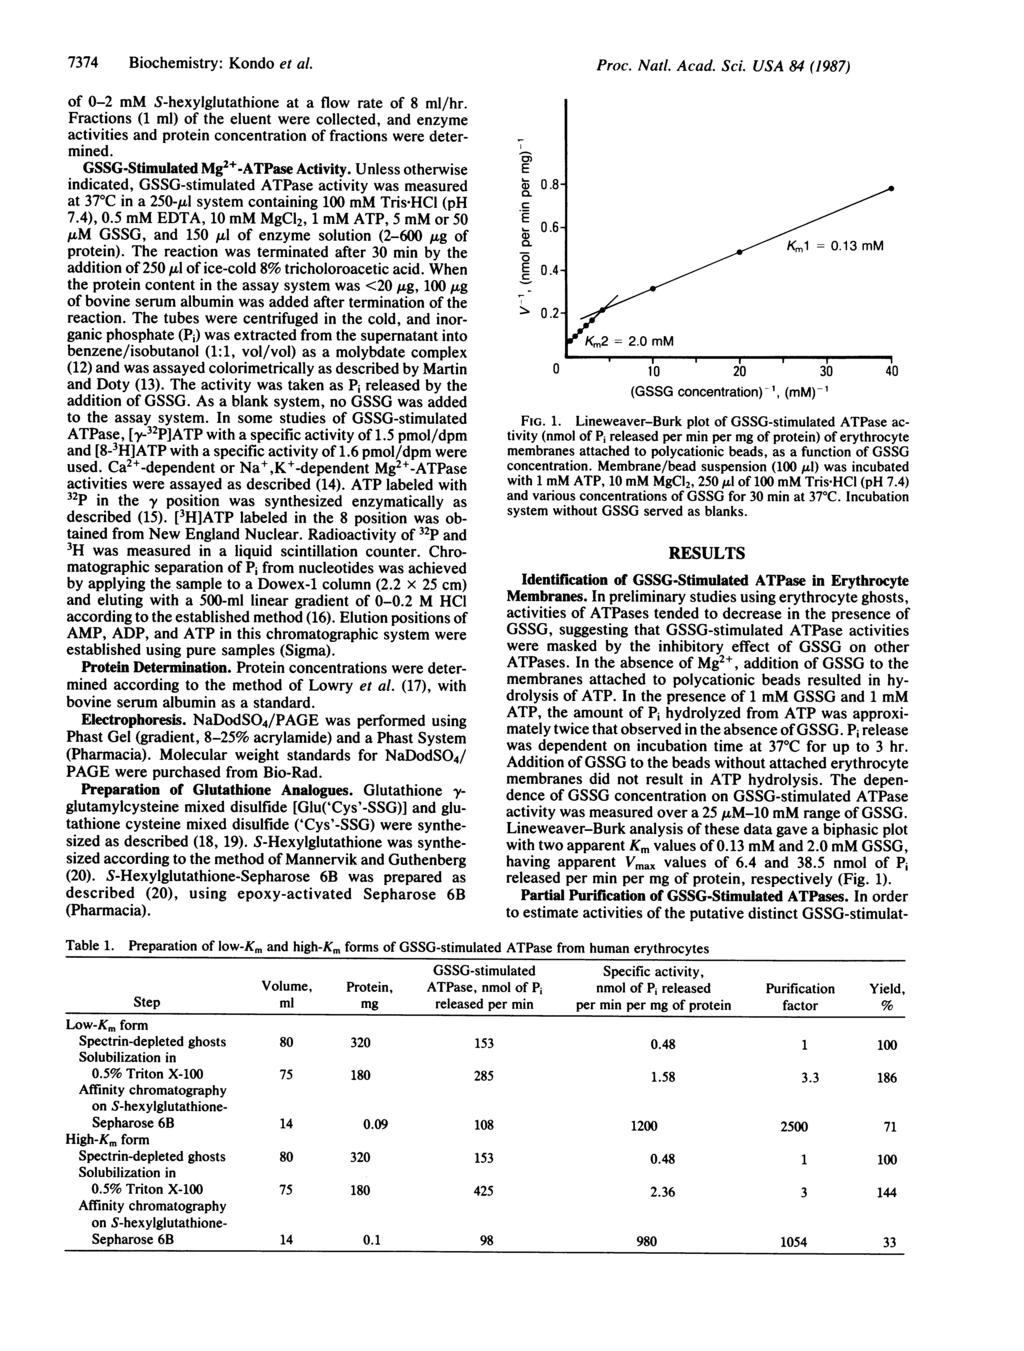 7374 Biochemistry: Kondo et al. Proc. Natl. Acad. Sci. USA 84 (1987) of 0-2 mm S-hexylglutathione at a flow rate of 8 ml/hr.